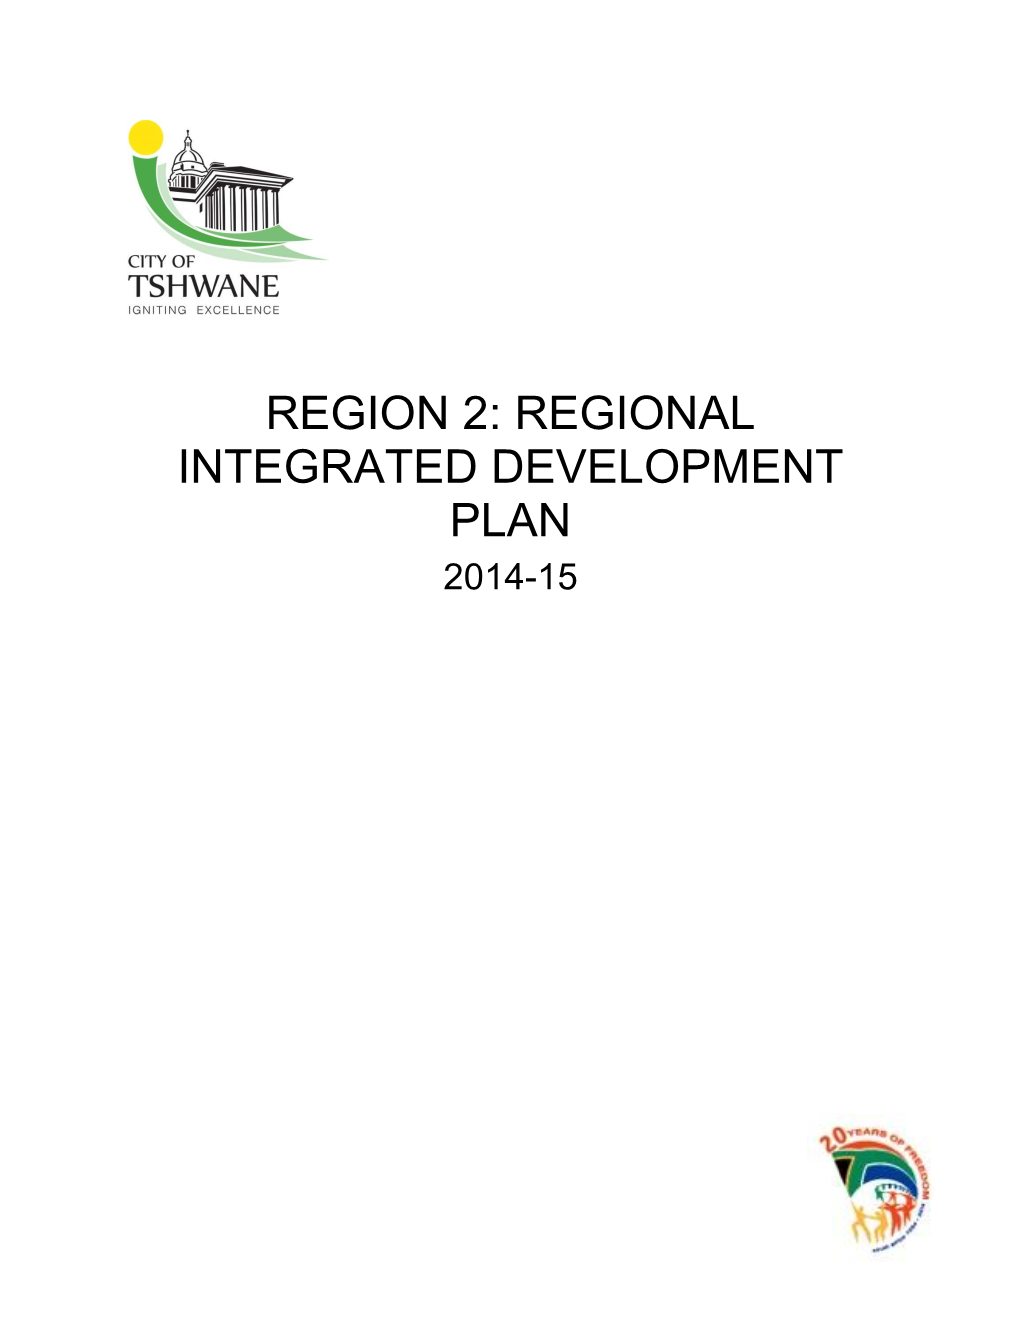 Region 2: Regional Integrated Development Plan 2014-15